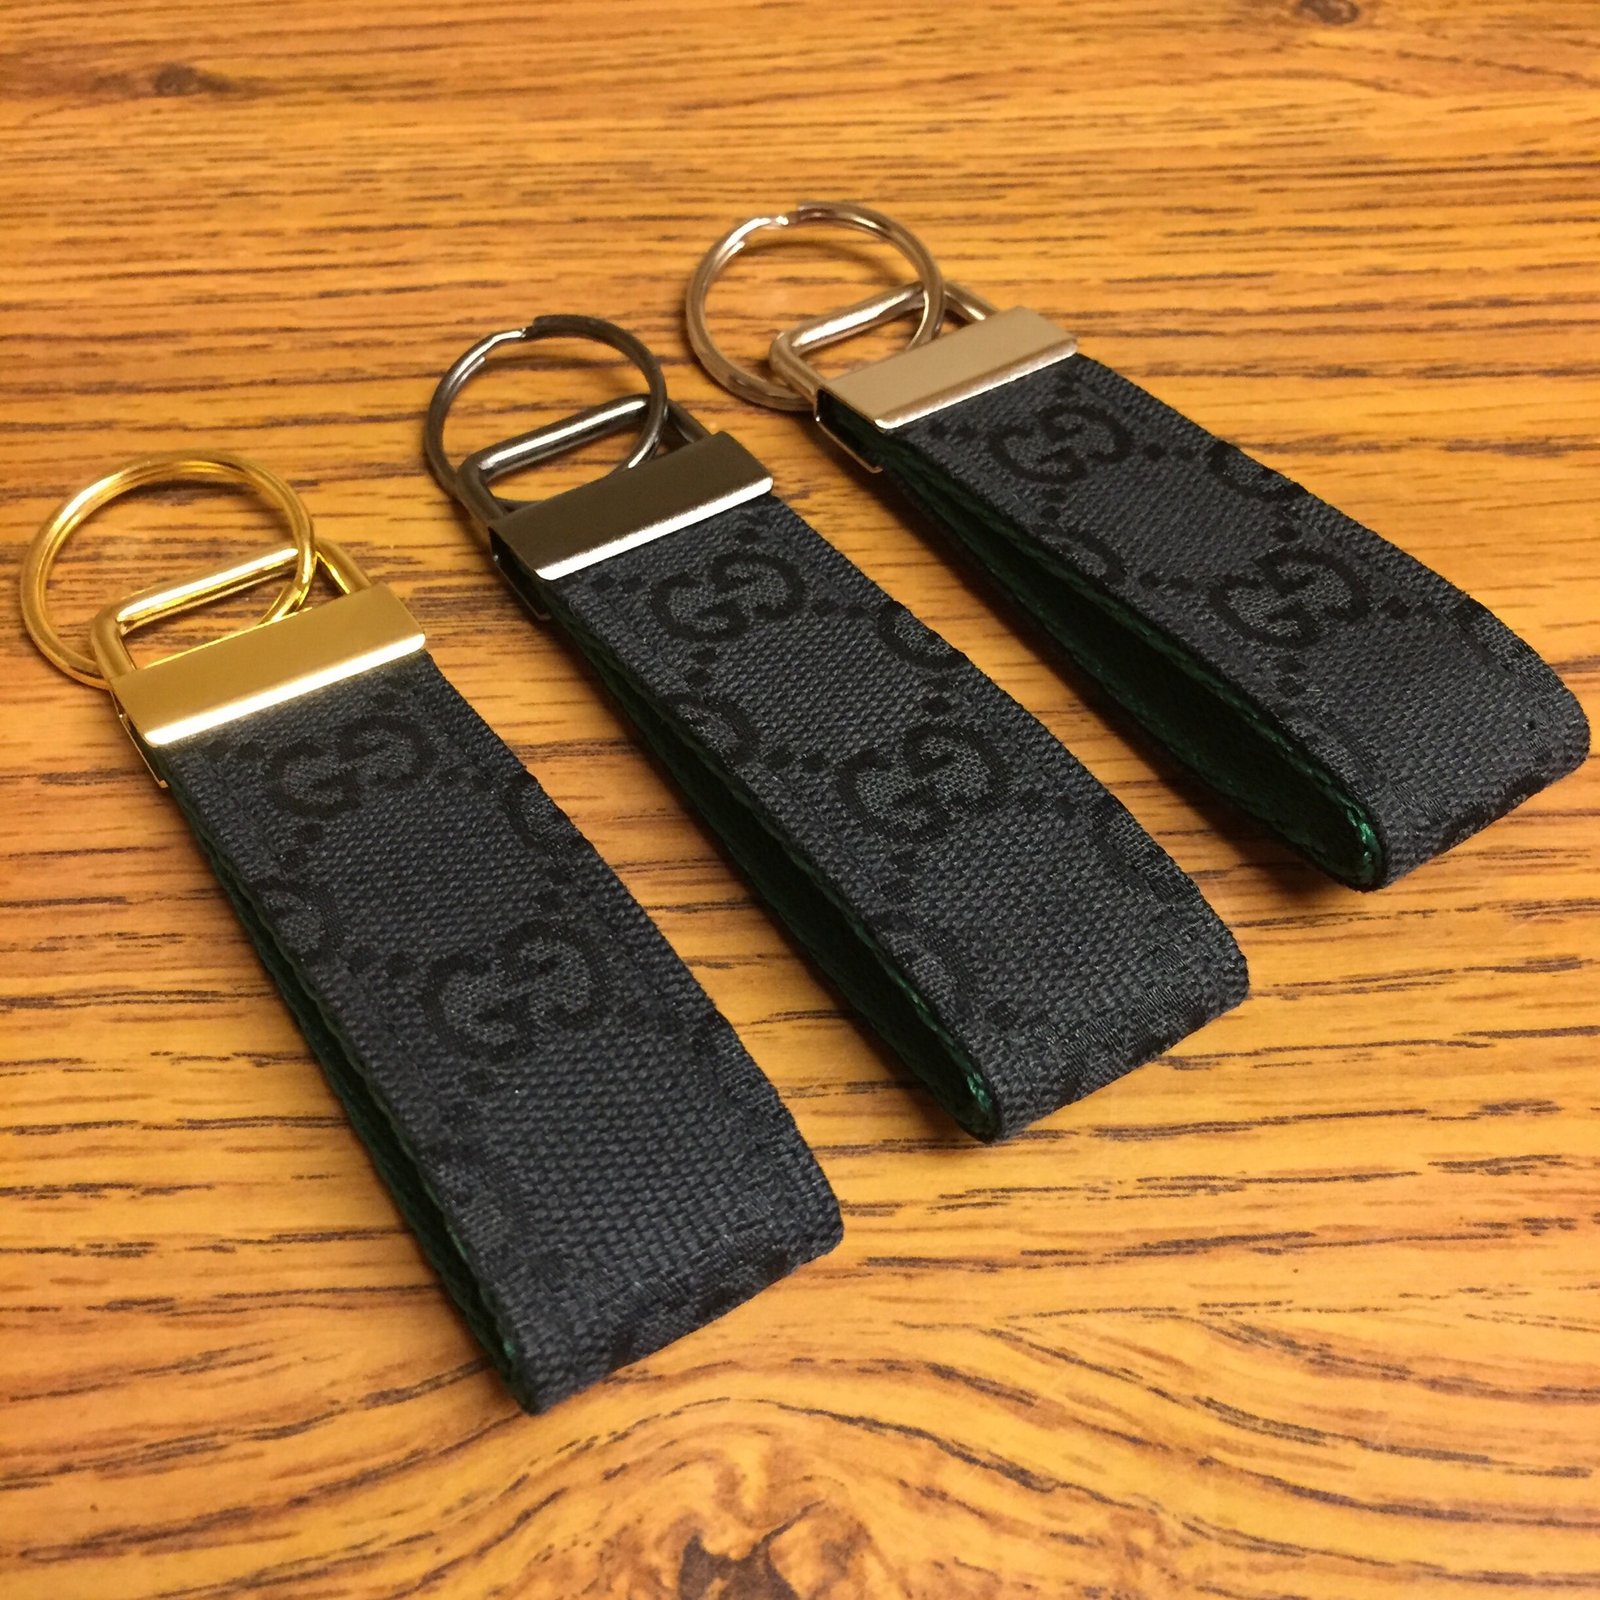 gucci leather keychain